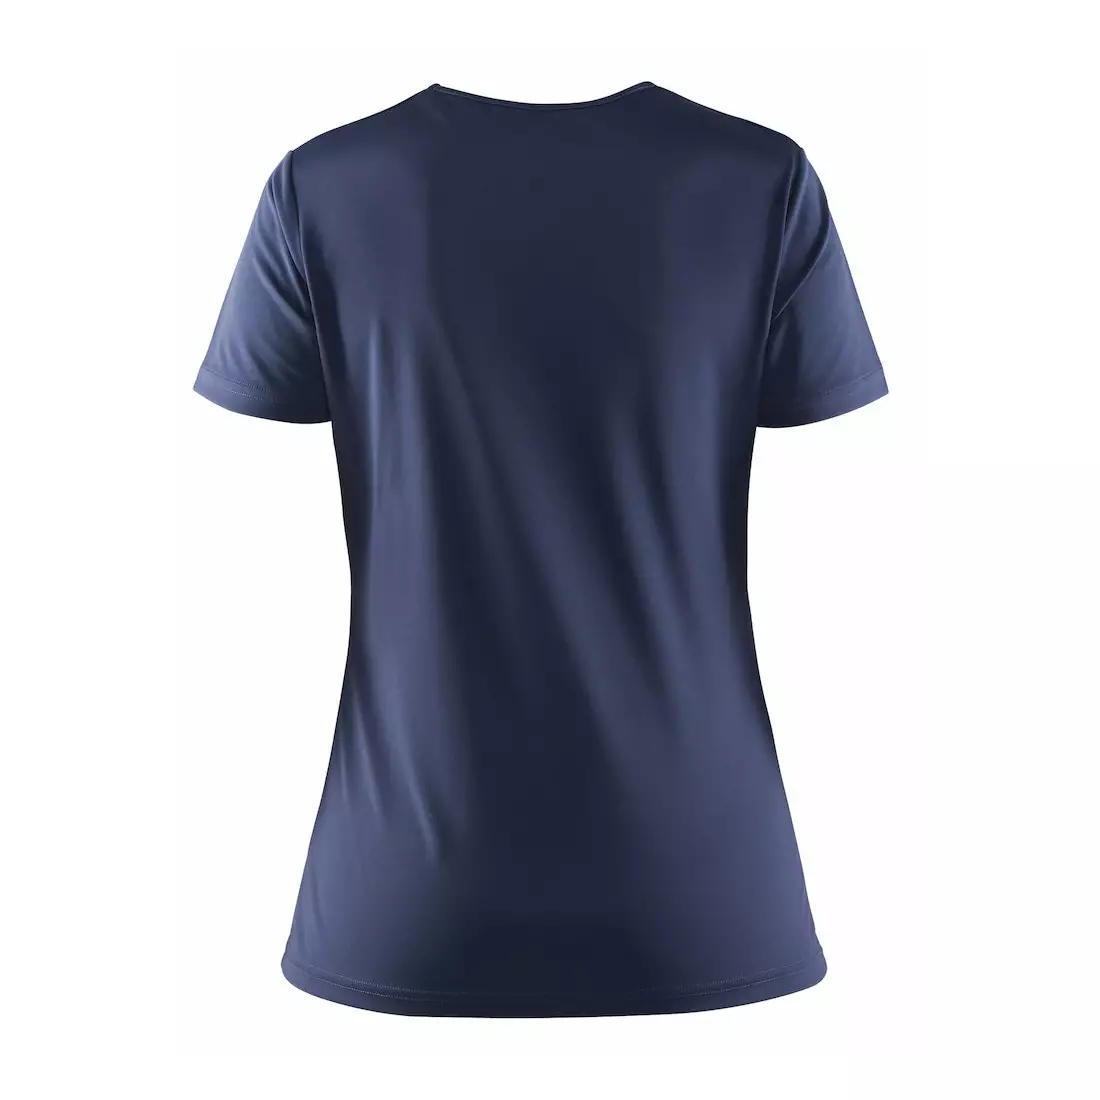 CRAFT Prime Logo 1904342 -2384 women's running T-shirt